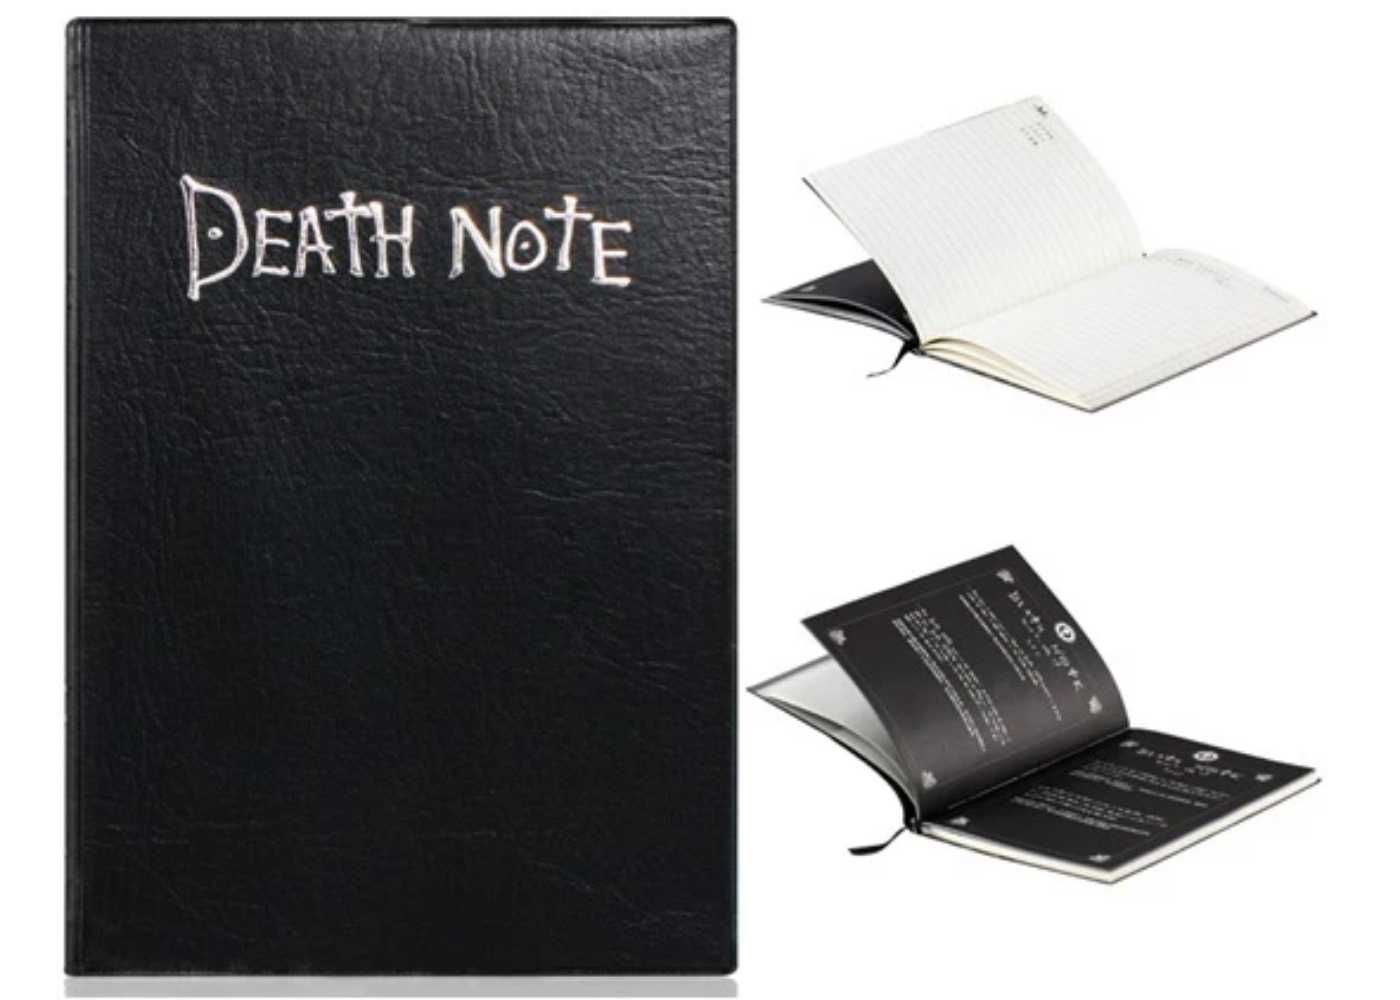 Тетрадь смерти блокнот аниме Death note